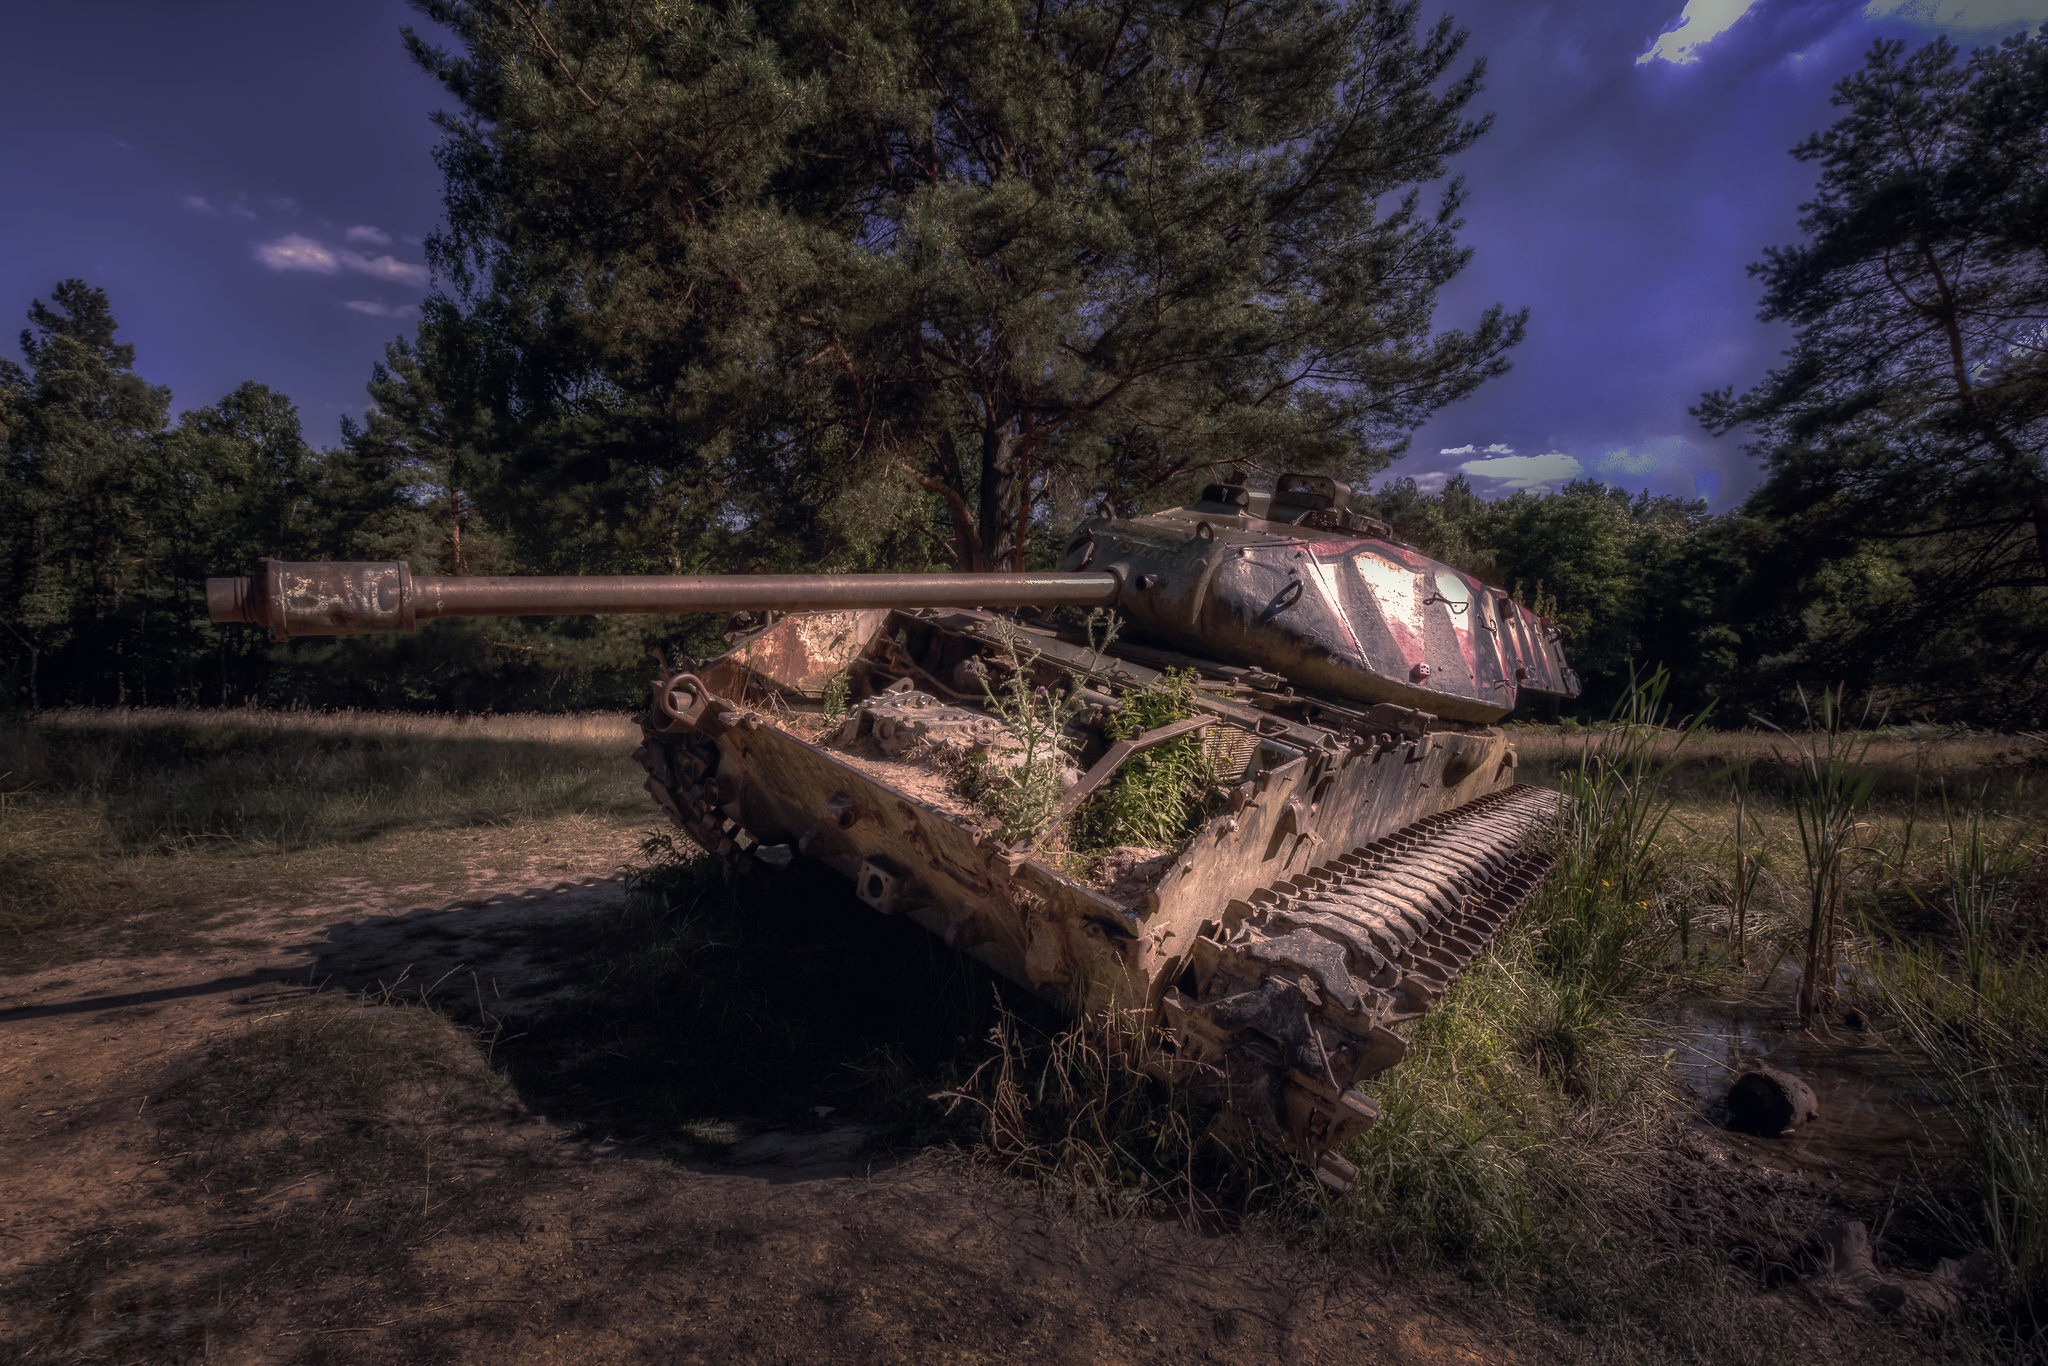 General 2048x1366 outdoors wreck tank military vehicle M41 Walker Bulldog overgrown